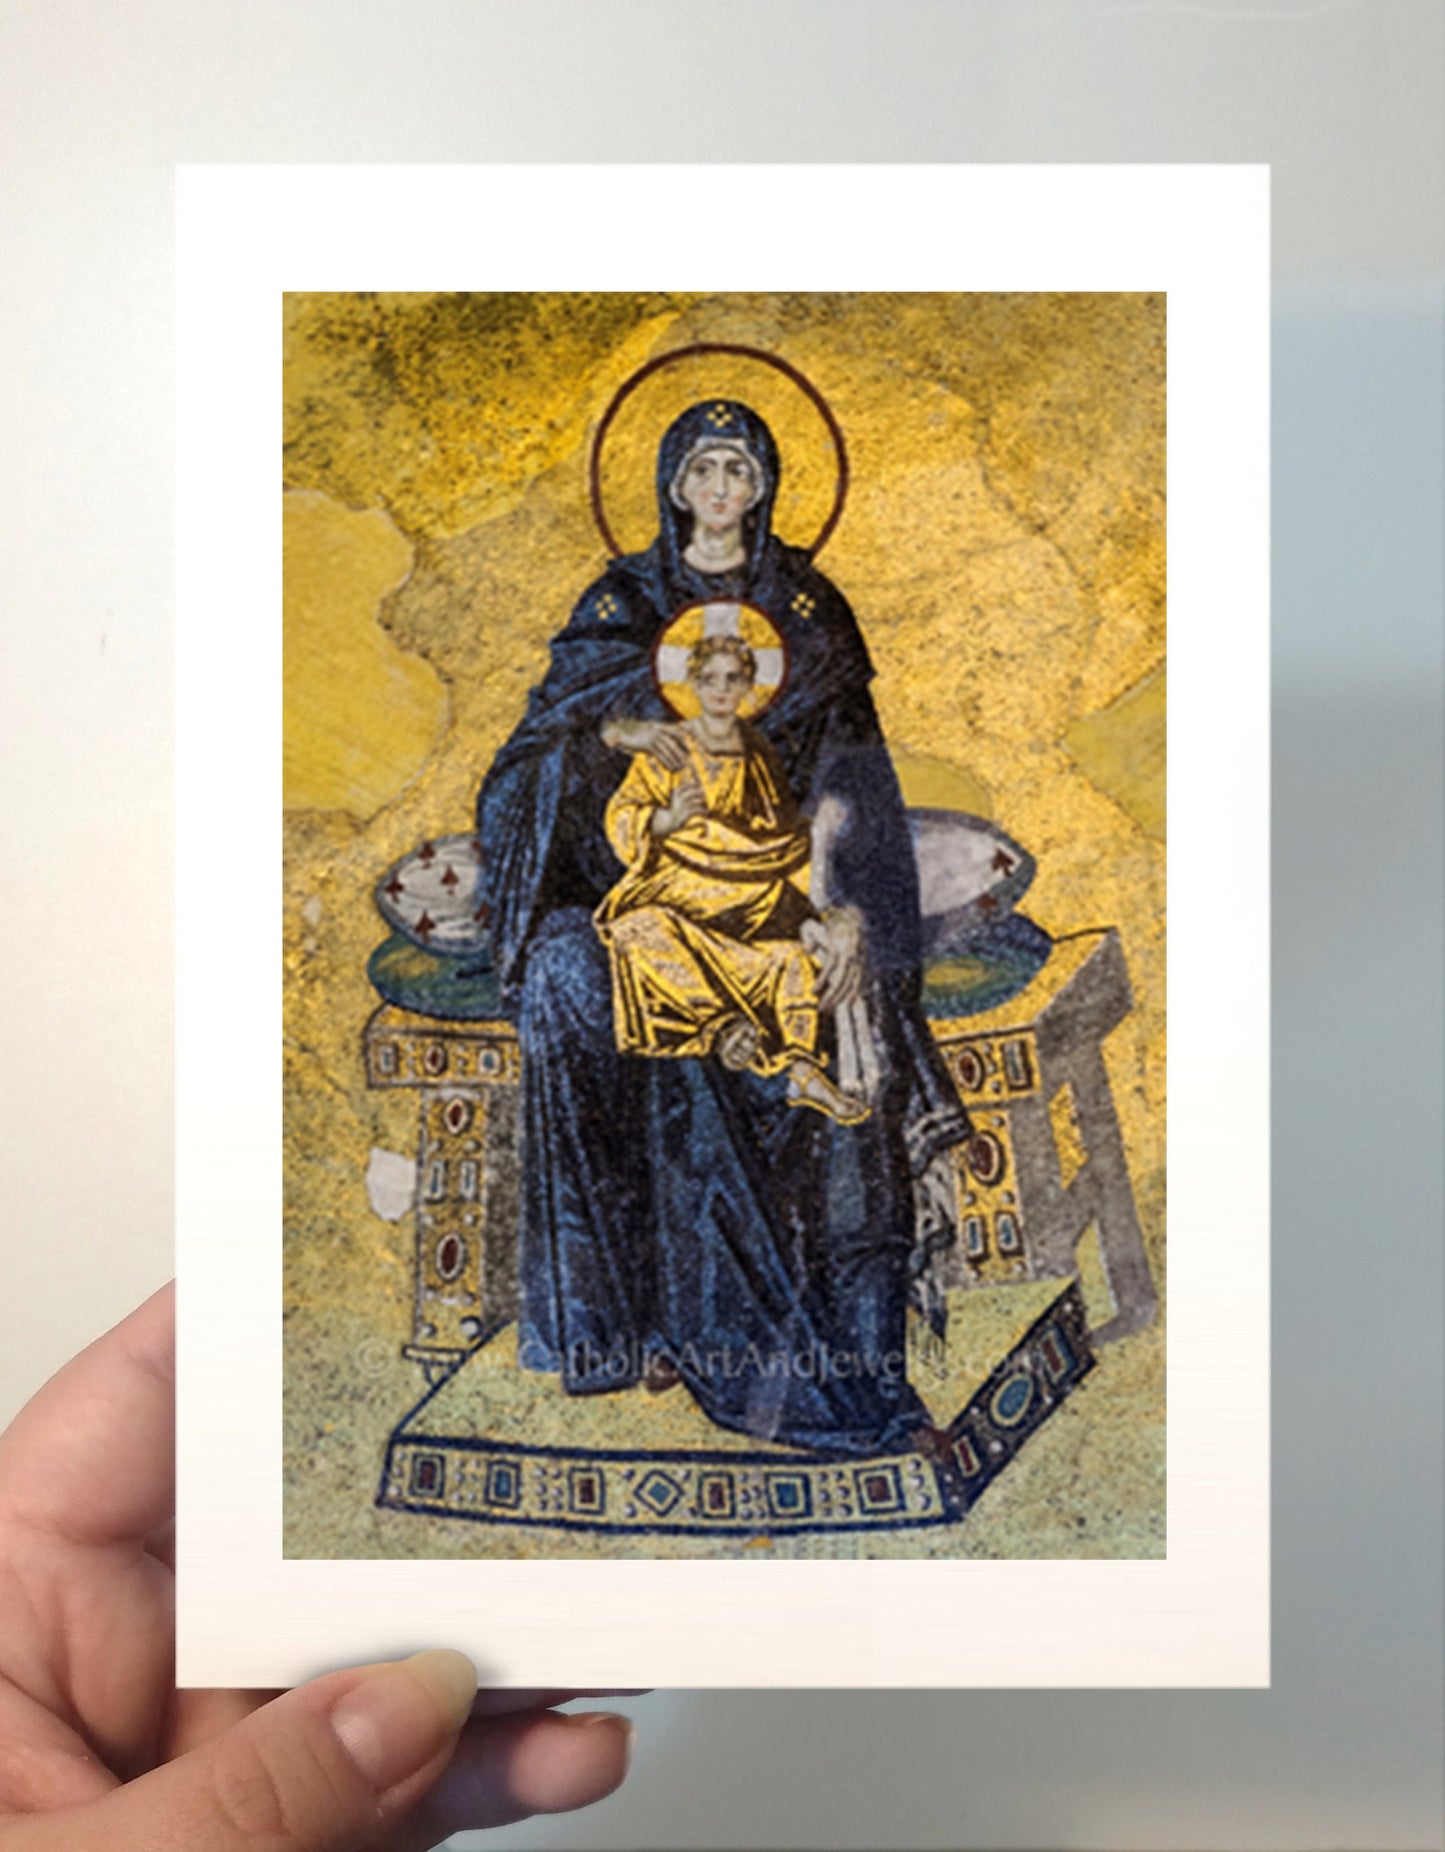 Theotokos – The Virgin and Child – Hagia Sophia, 537 A.D. – 3 sizes